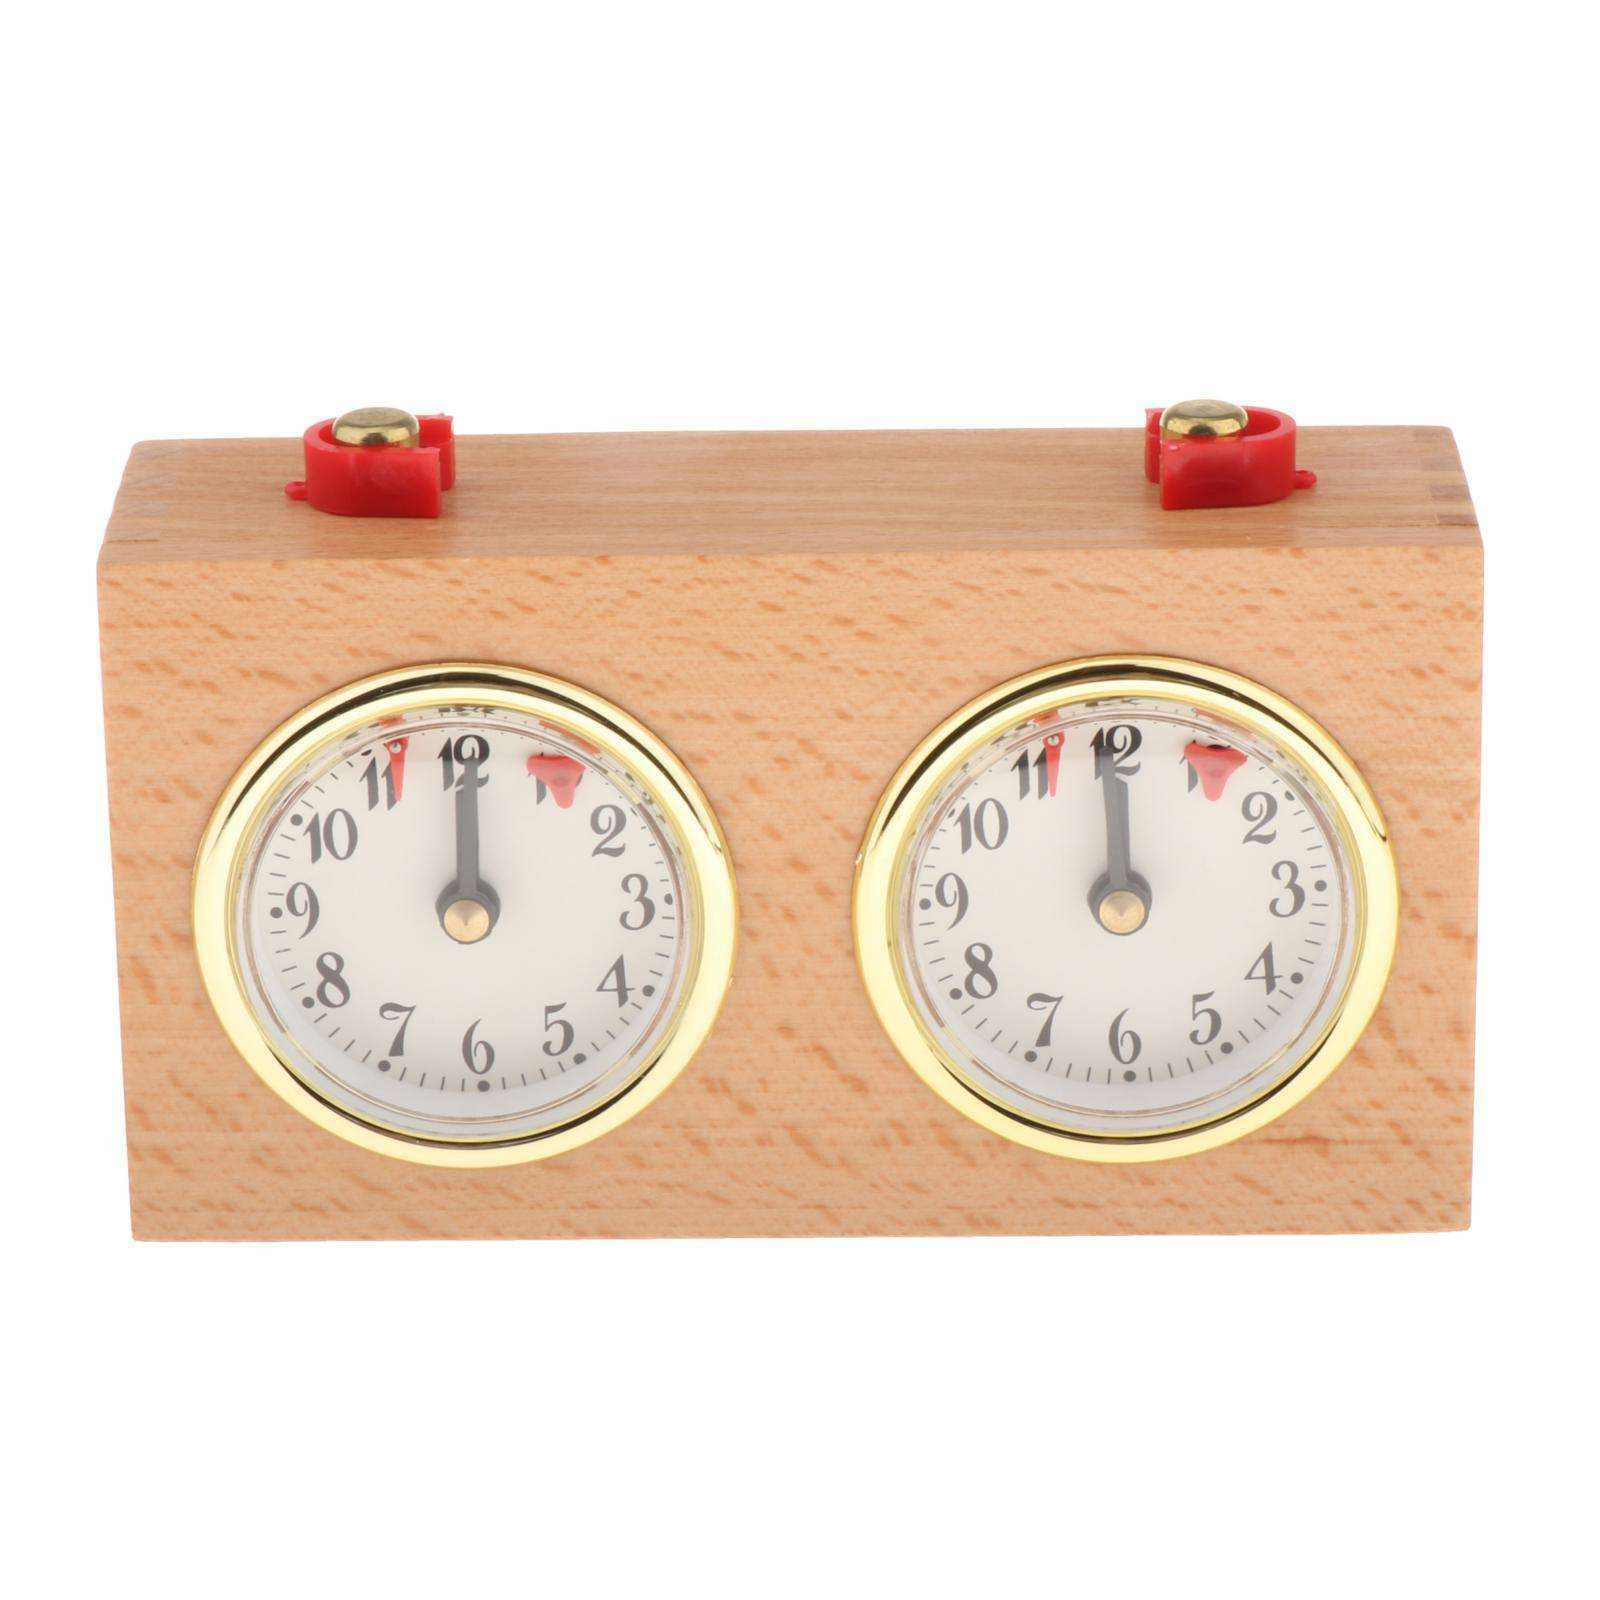 Retro Analog Chess Clock Timer, Wind-Up Mechanical Chess Clock, Professional